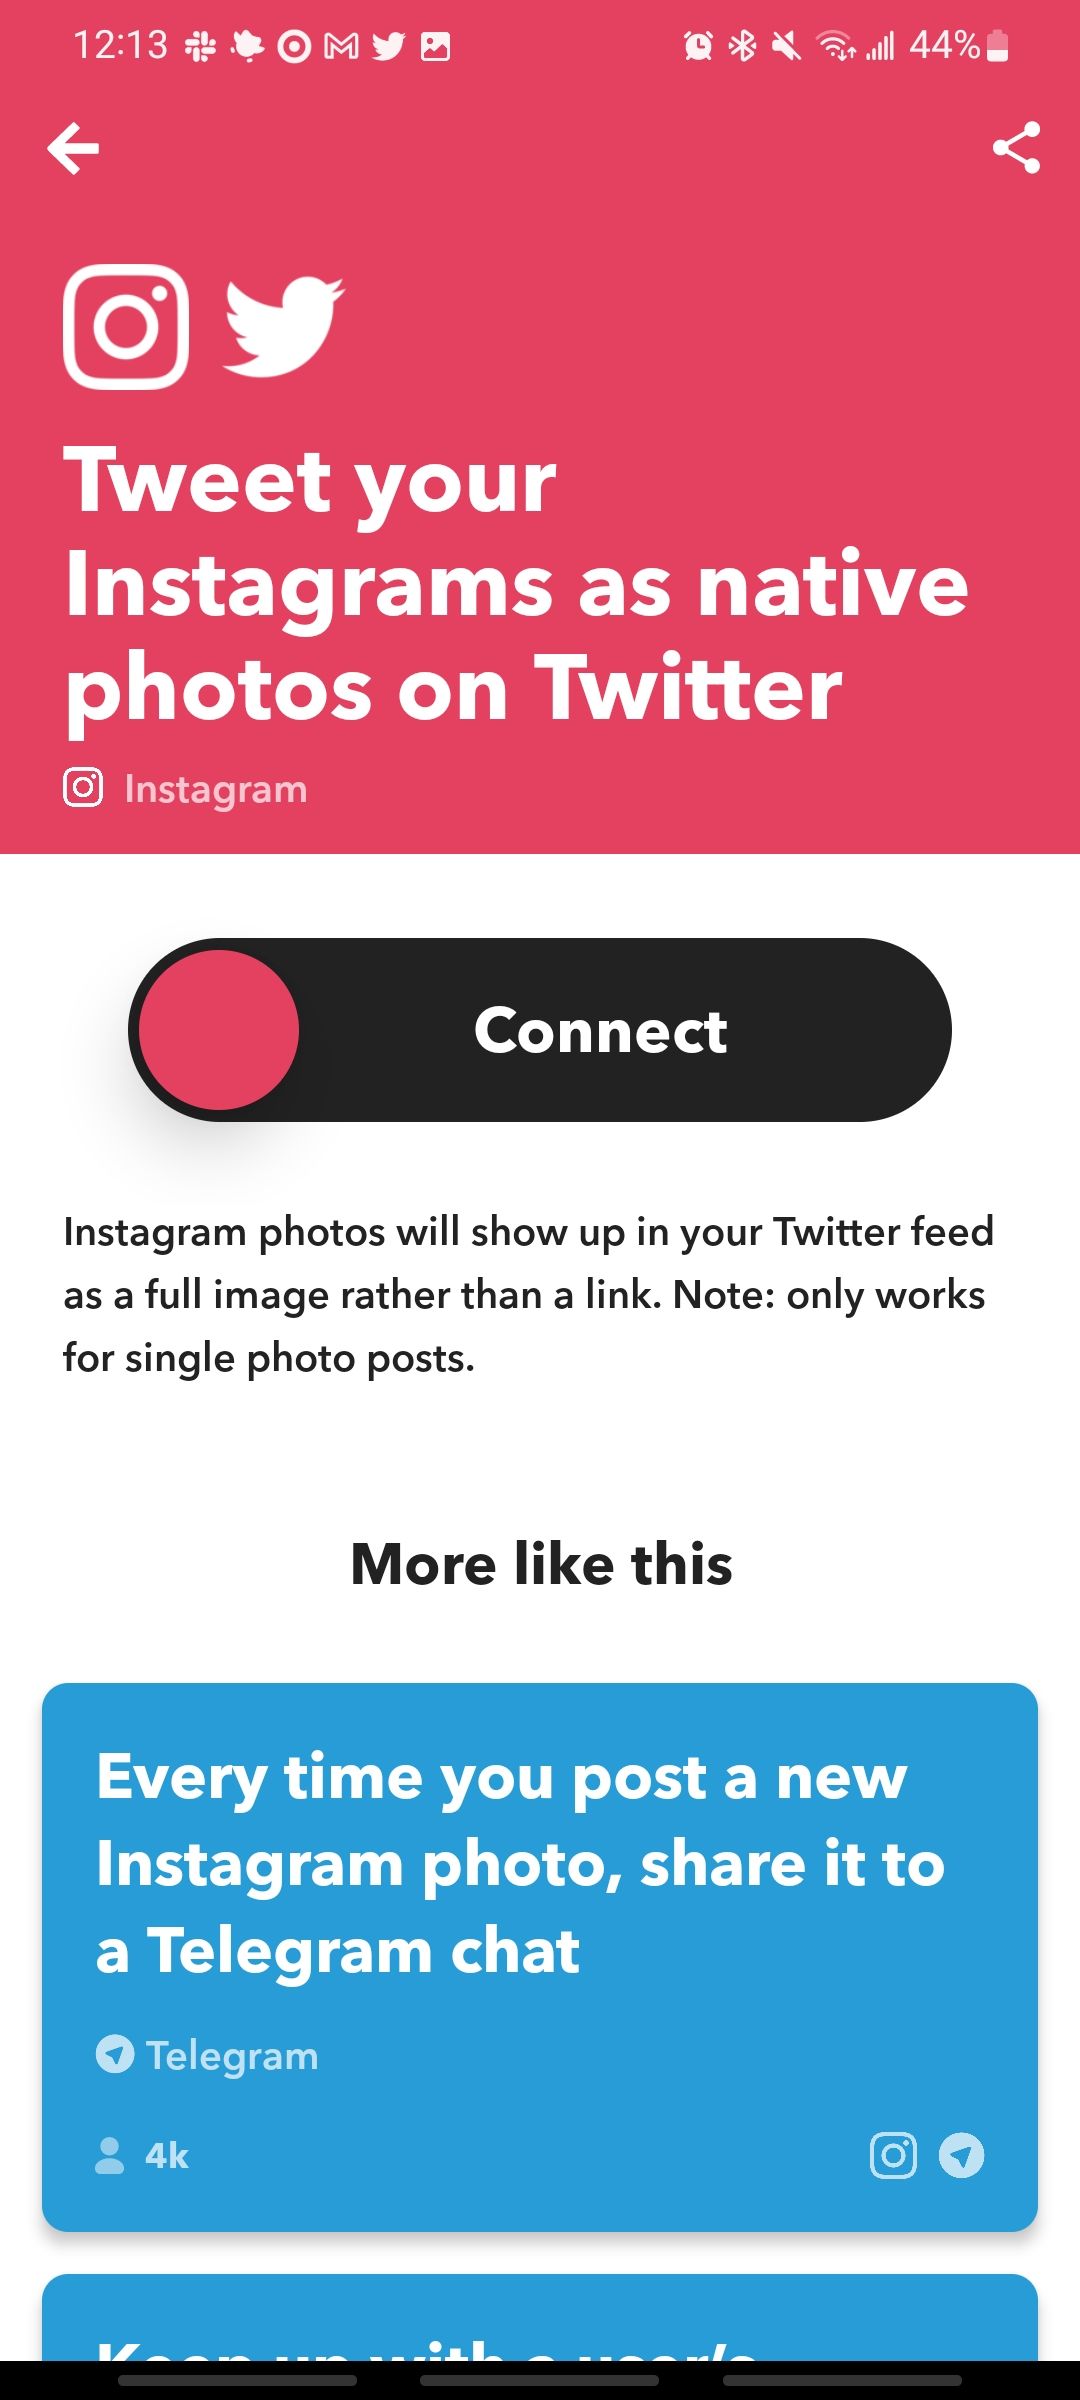 tweet your instagrams as native photos on twitter applet on ifttt